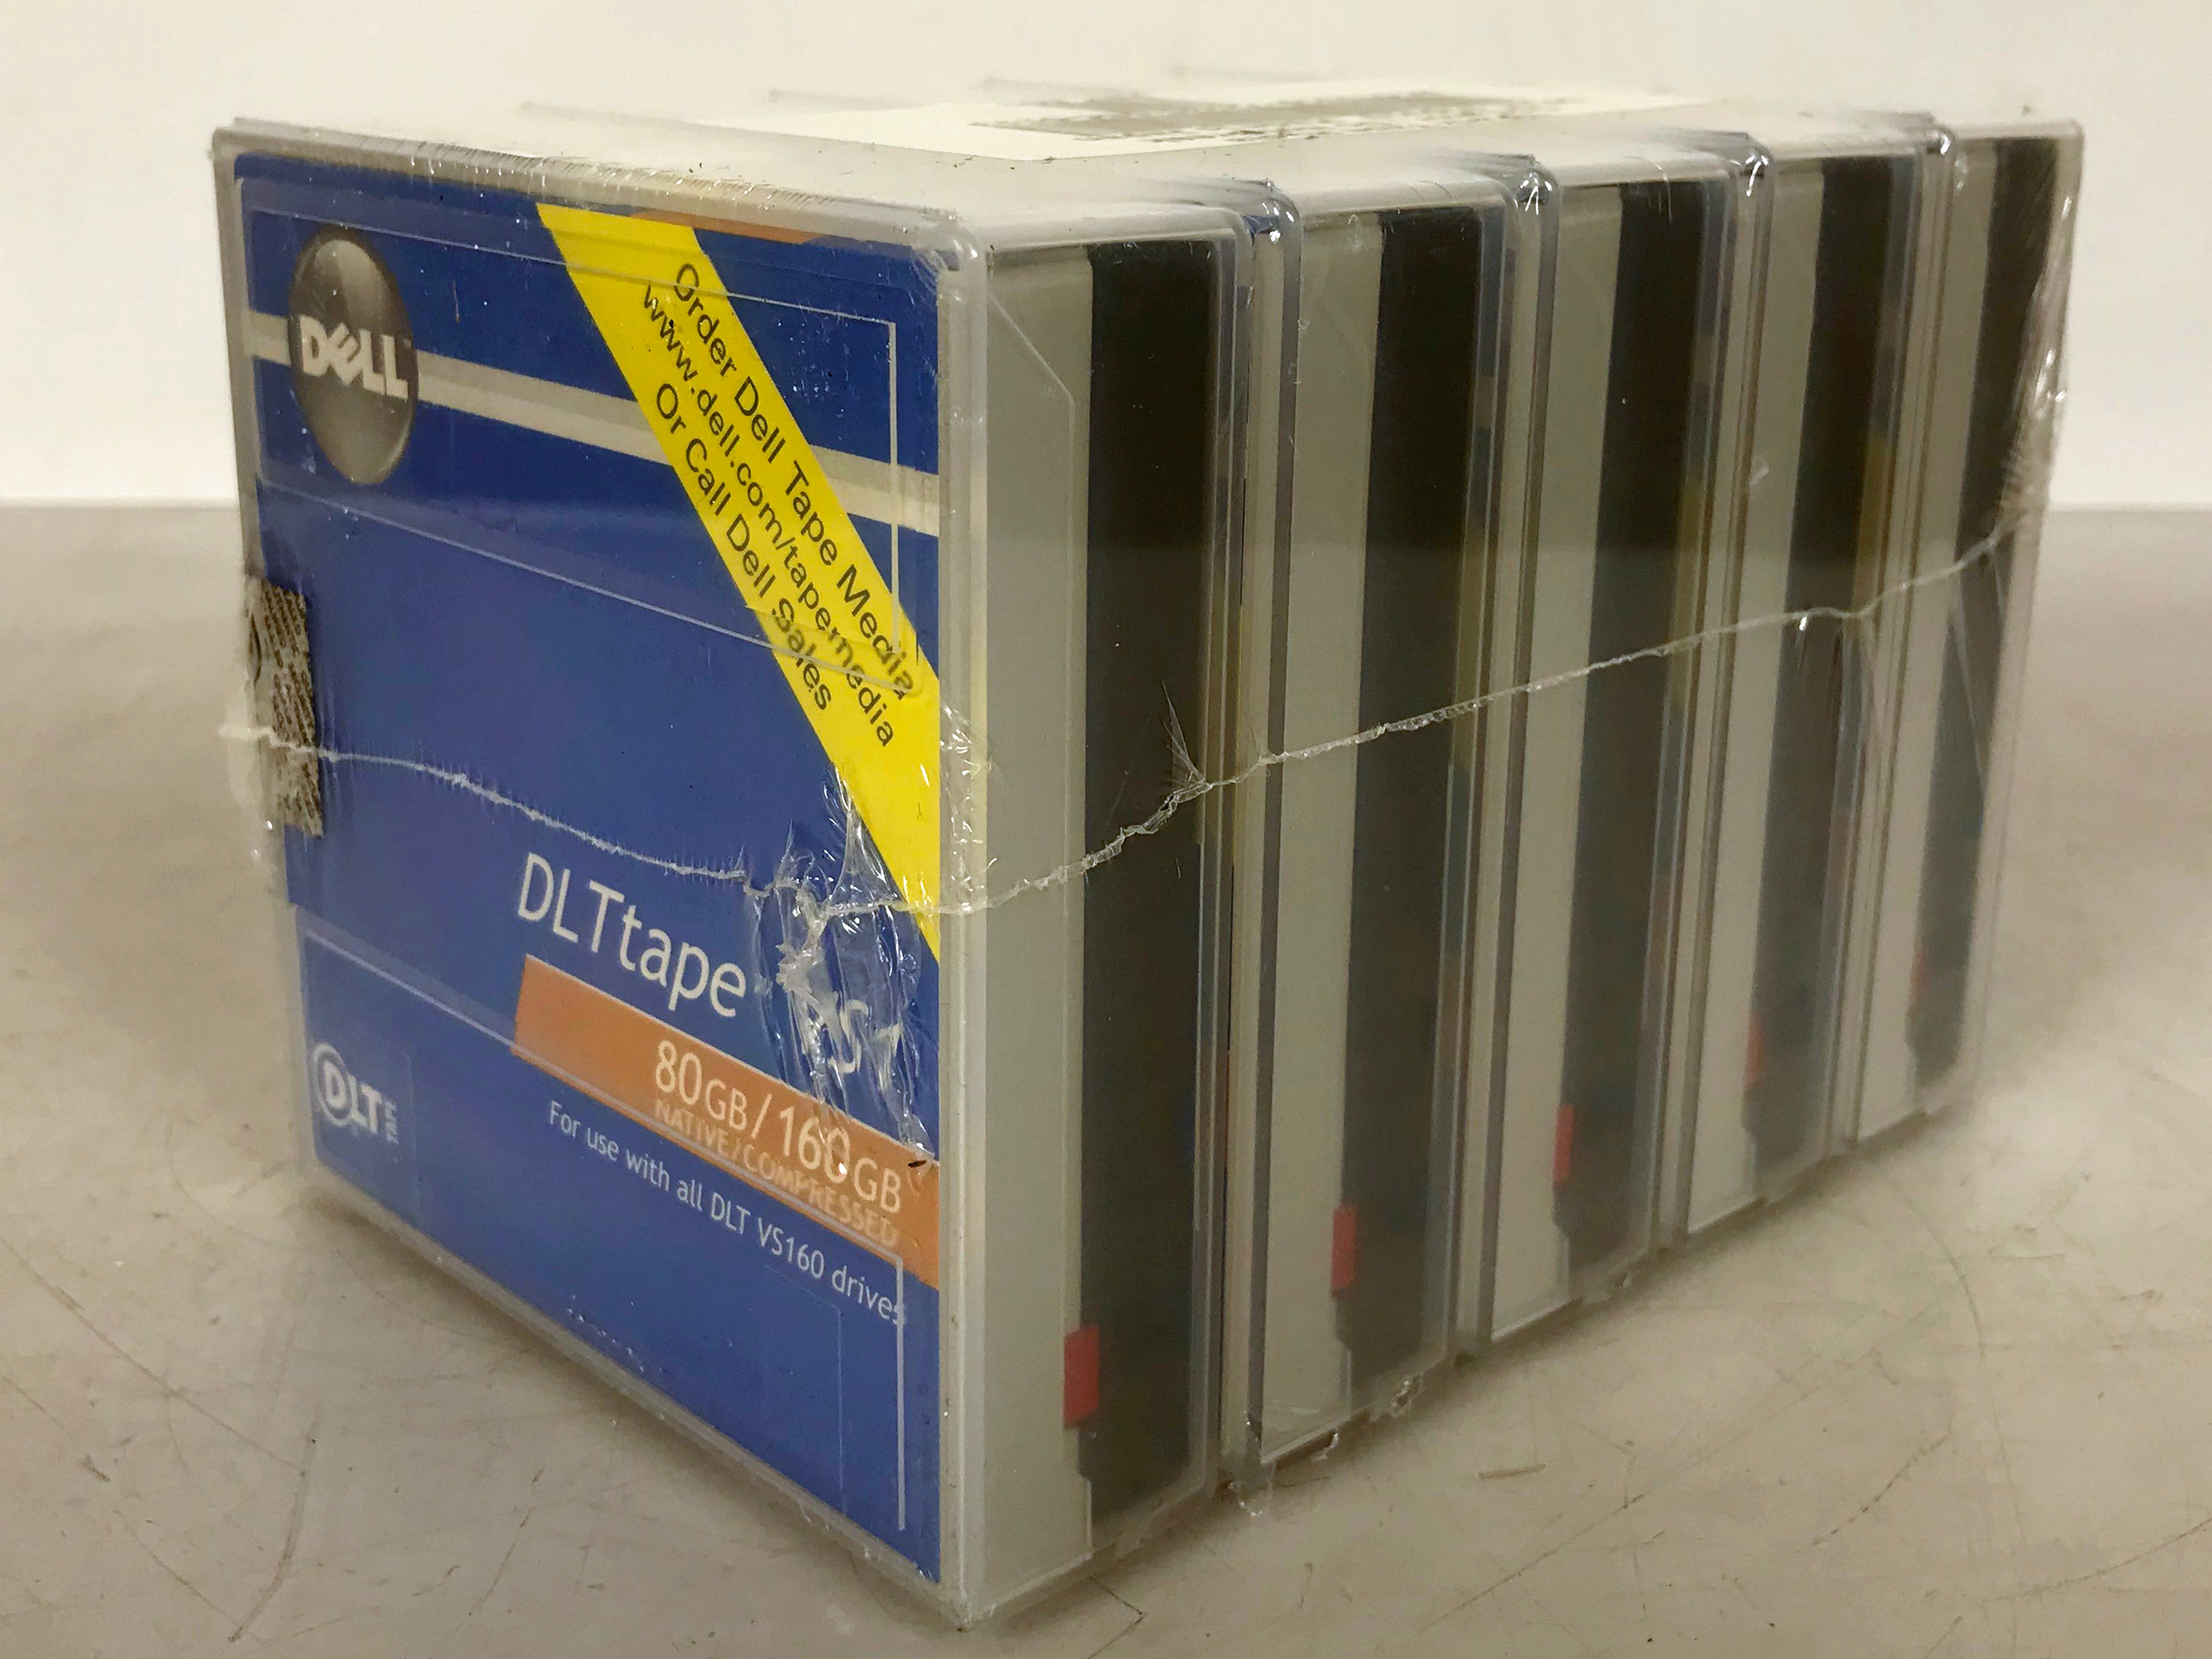 5-Pack Dell DLTtape VS1 80GB/160GB Tape Cartridges